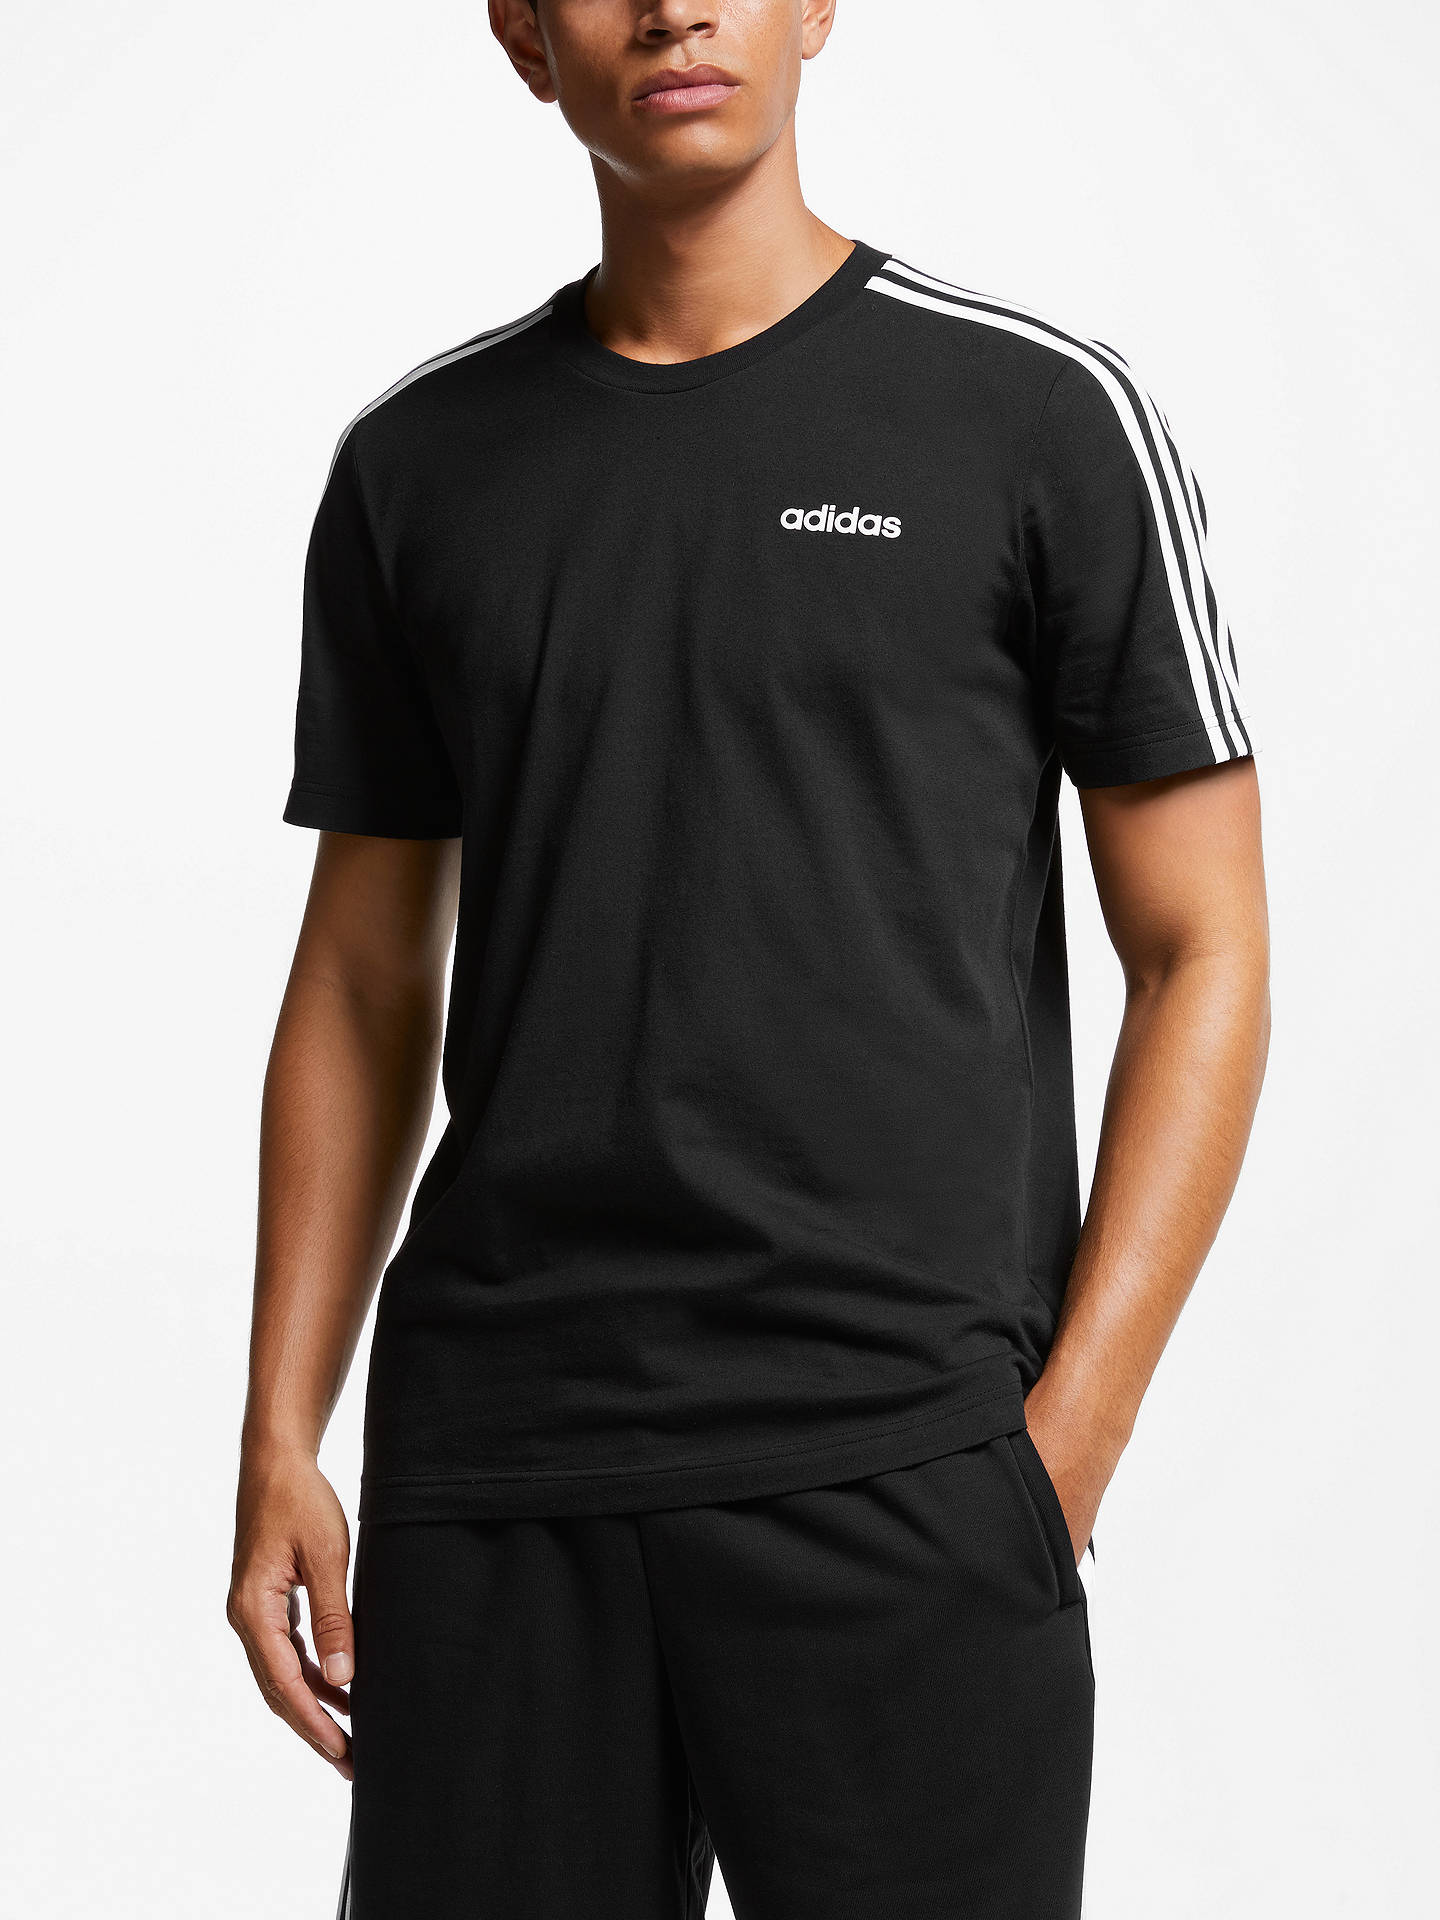 Adidas Essentials 3 Stripes T Shirt Black White At John Lewis